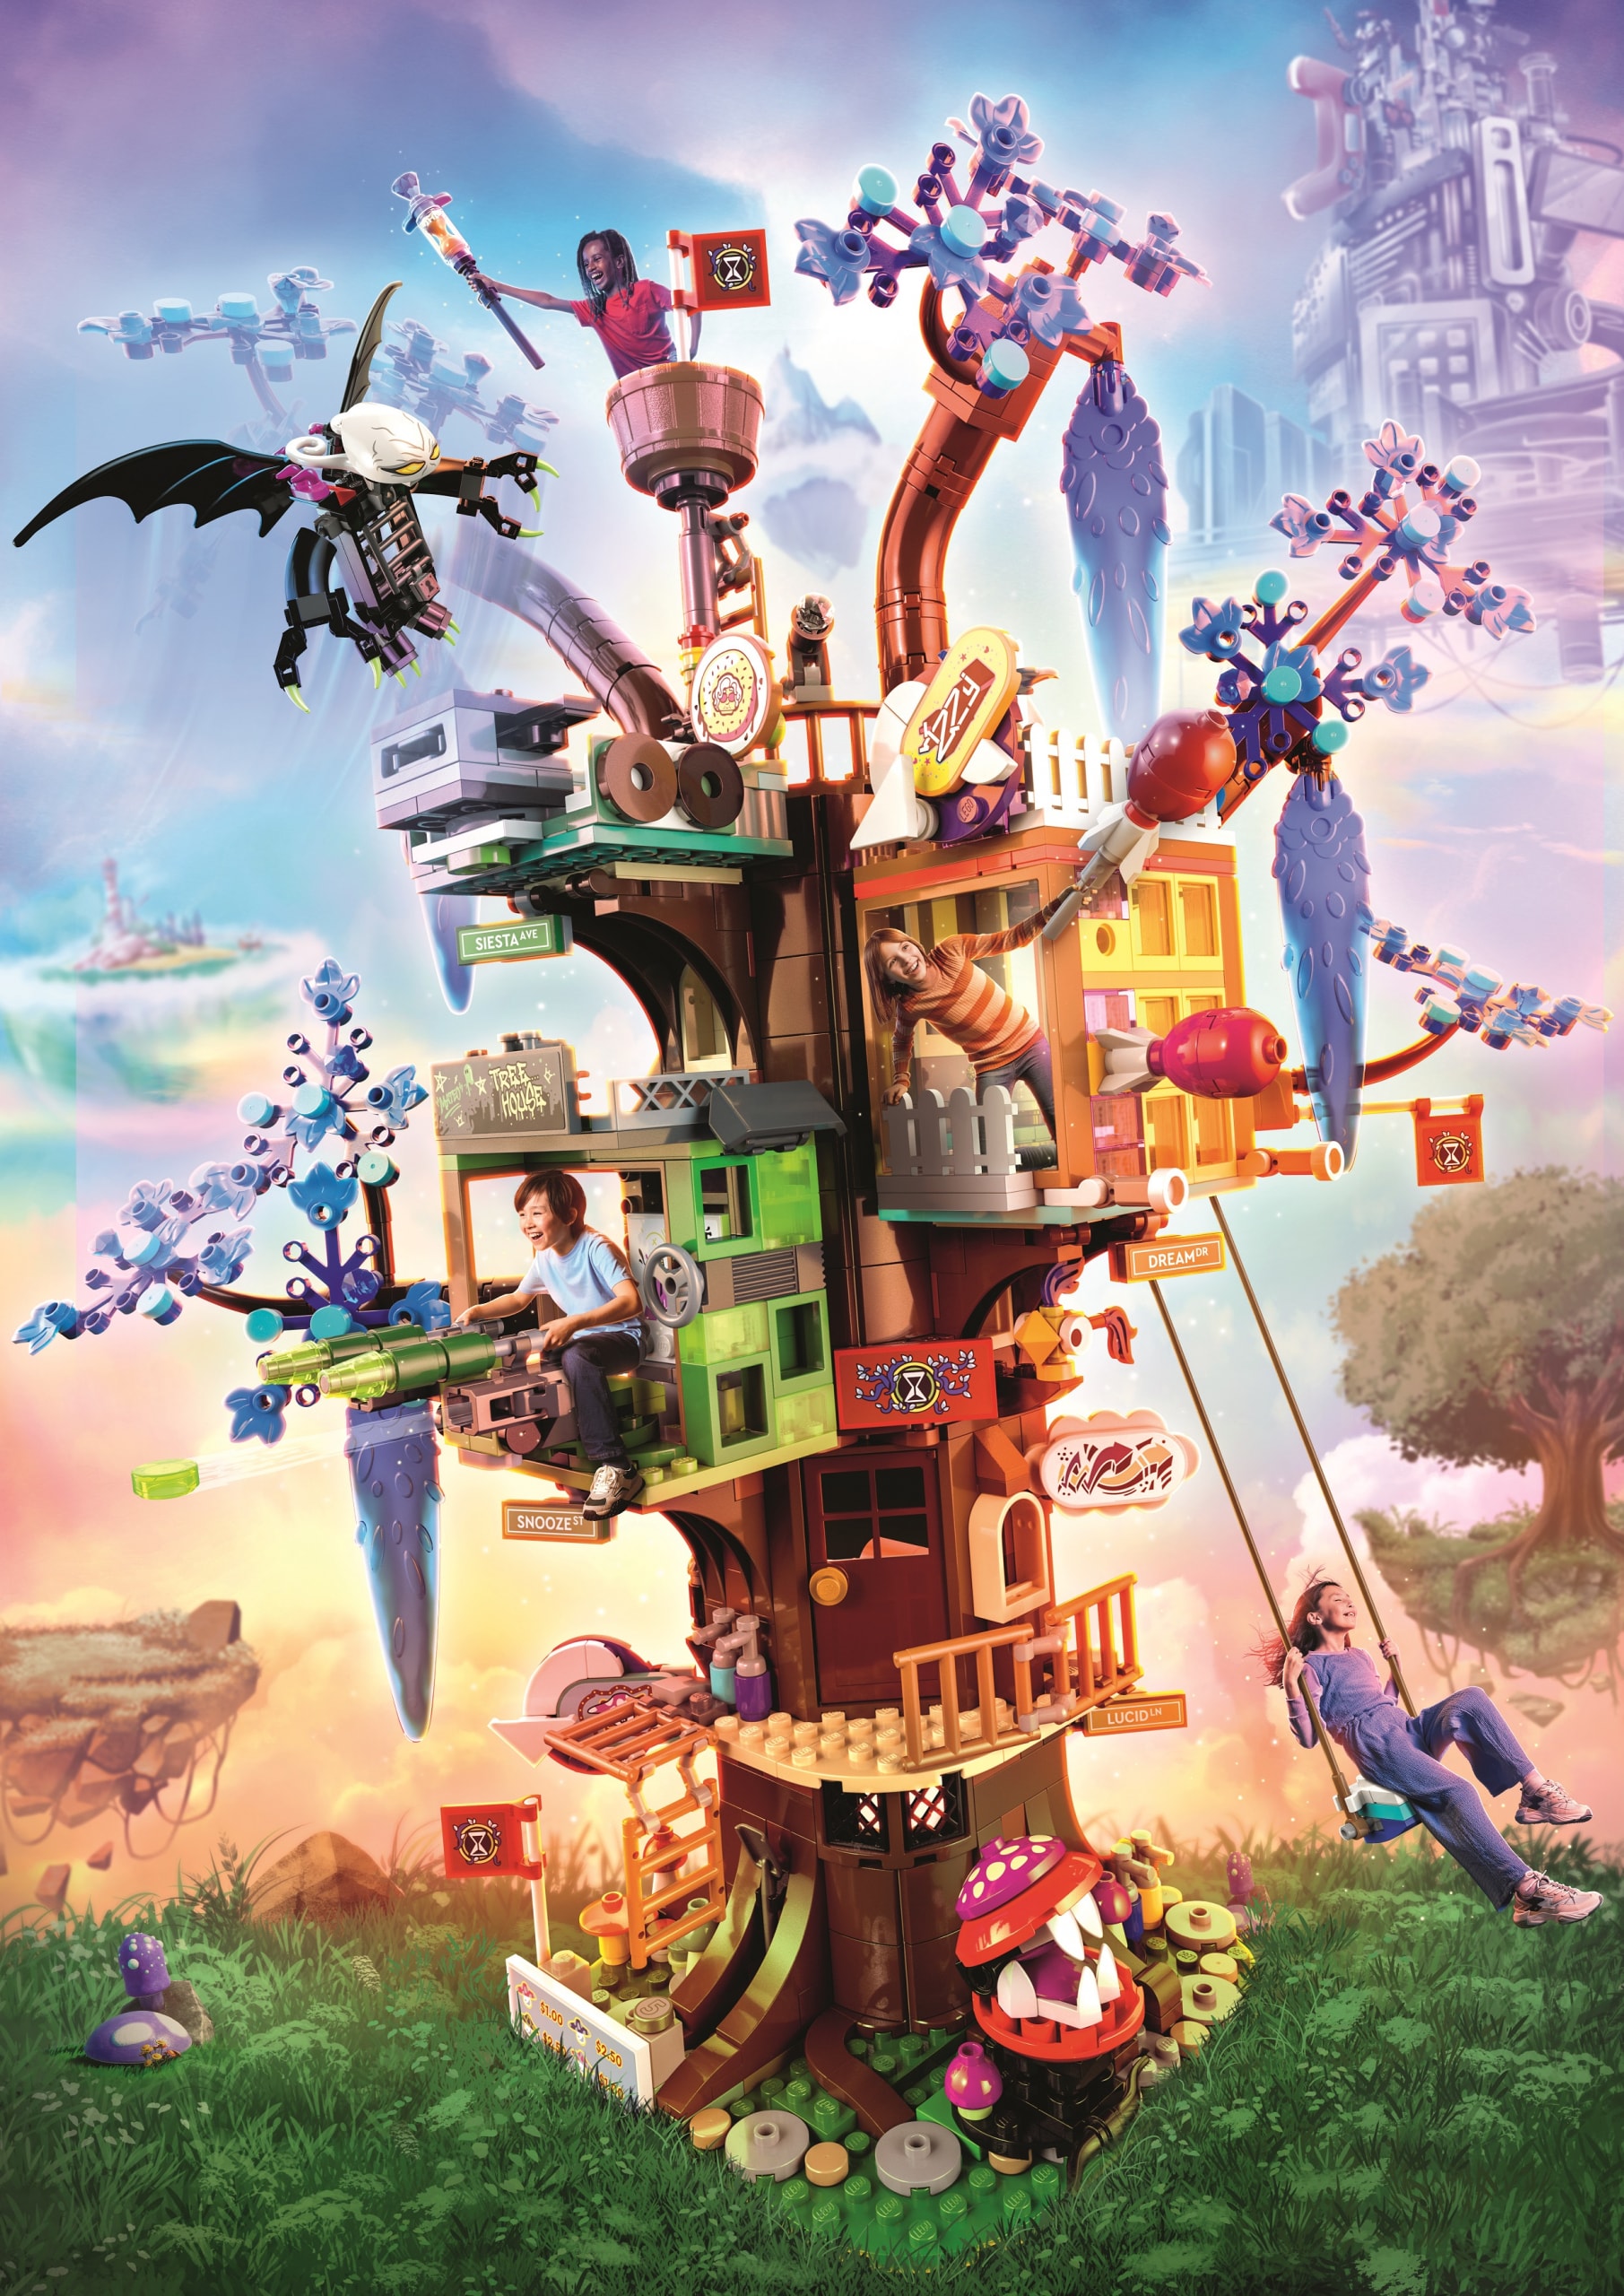 LEGO@ 梦境城猎人系列首批新品正式登场